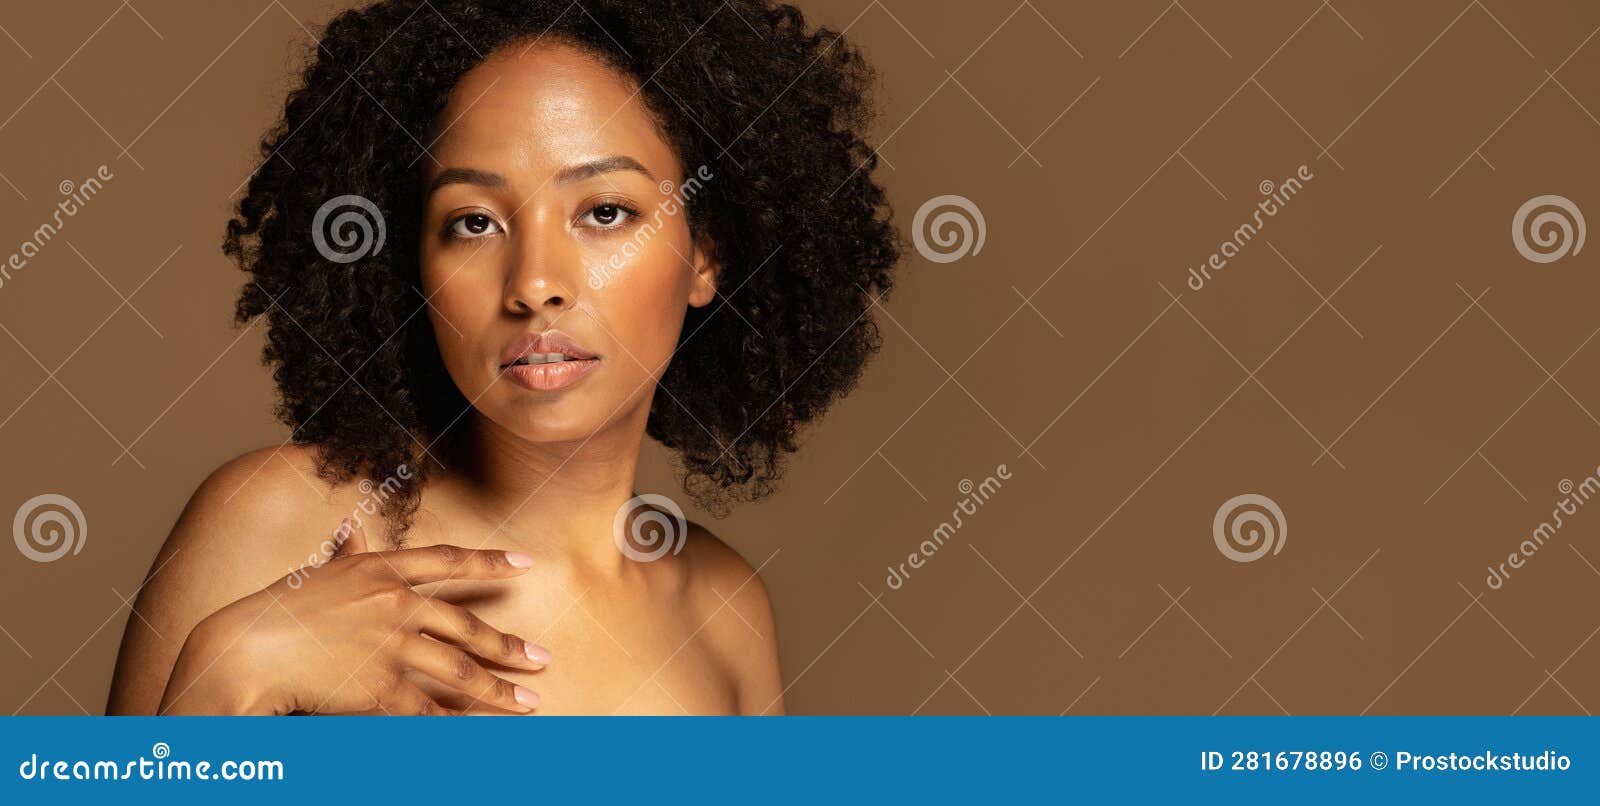 david aulgur recommends fine naked black women pic